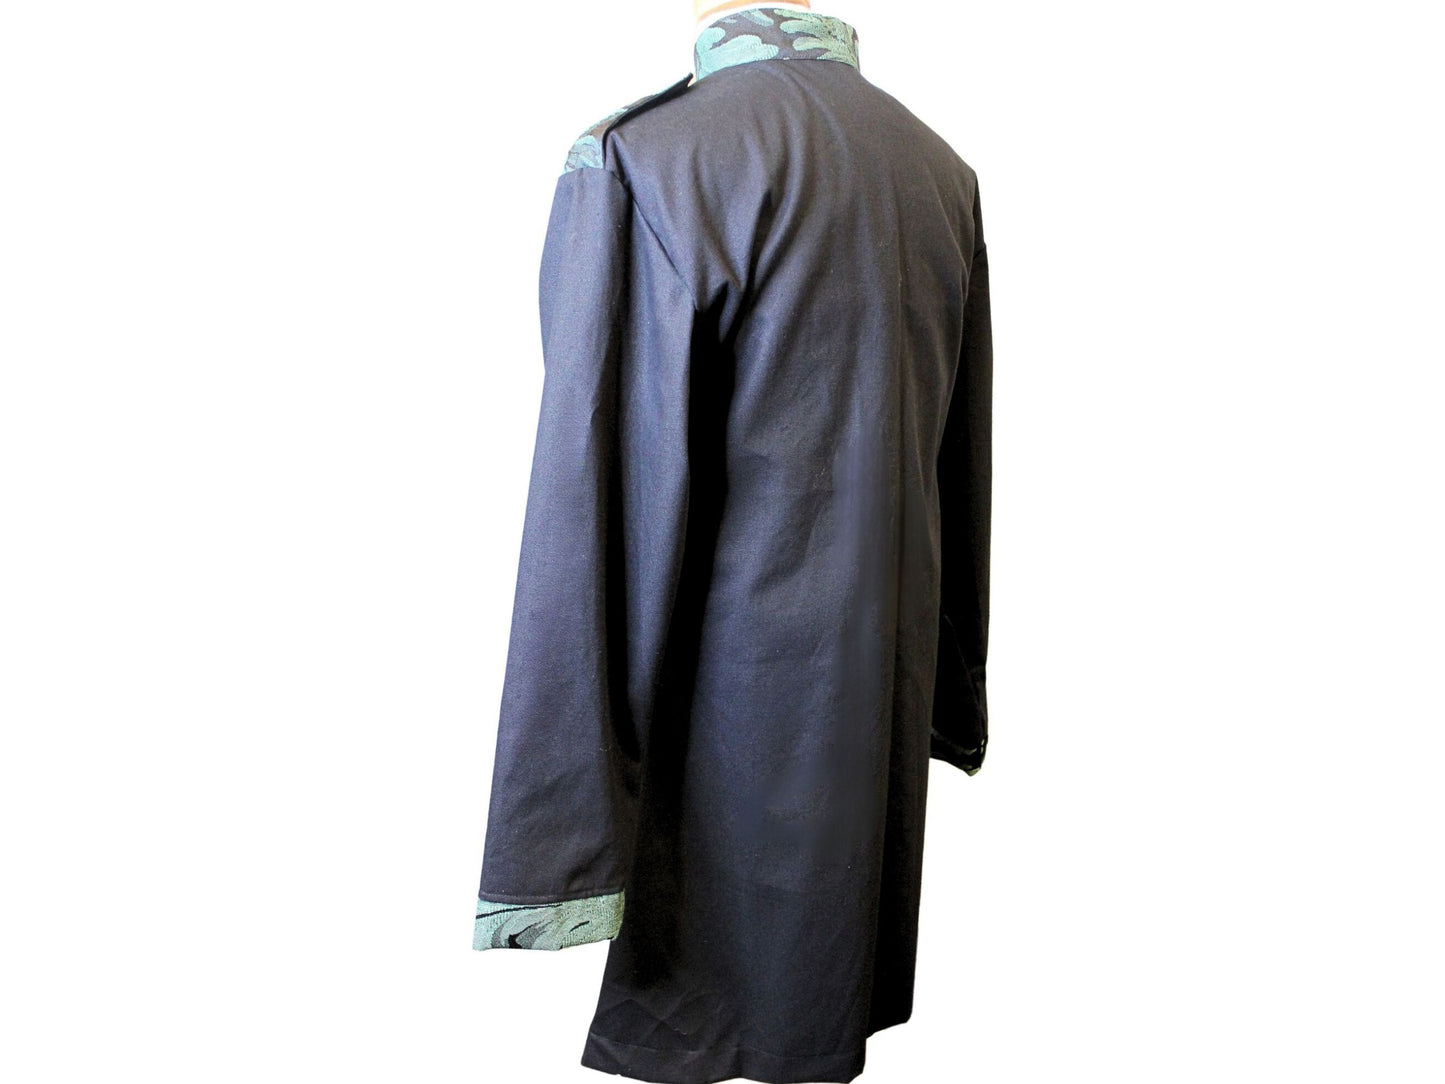 The VM Steampunk Jacket